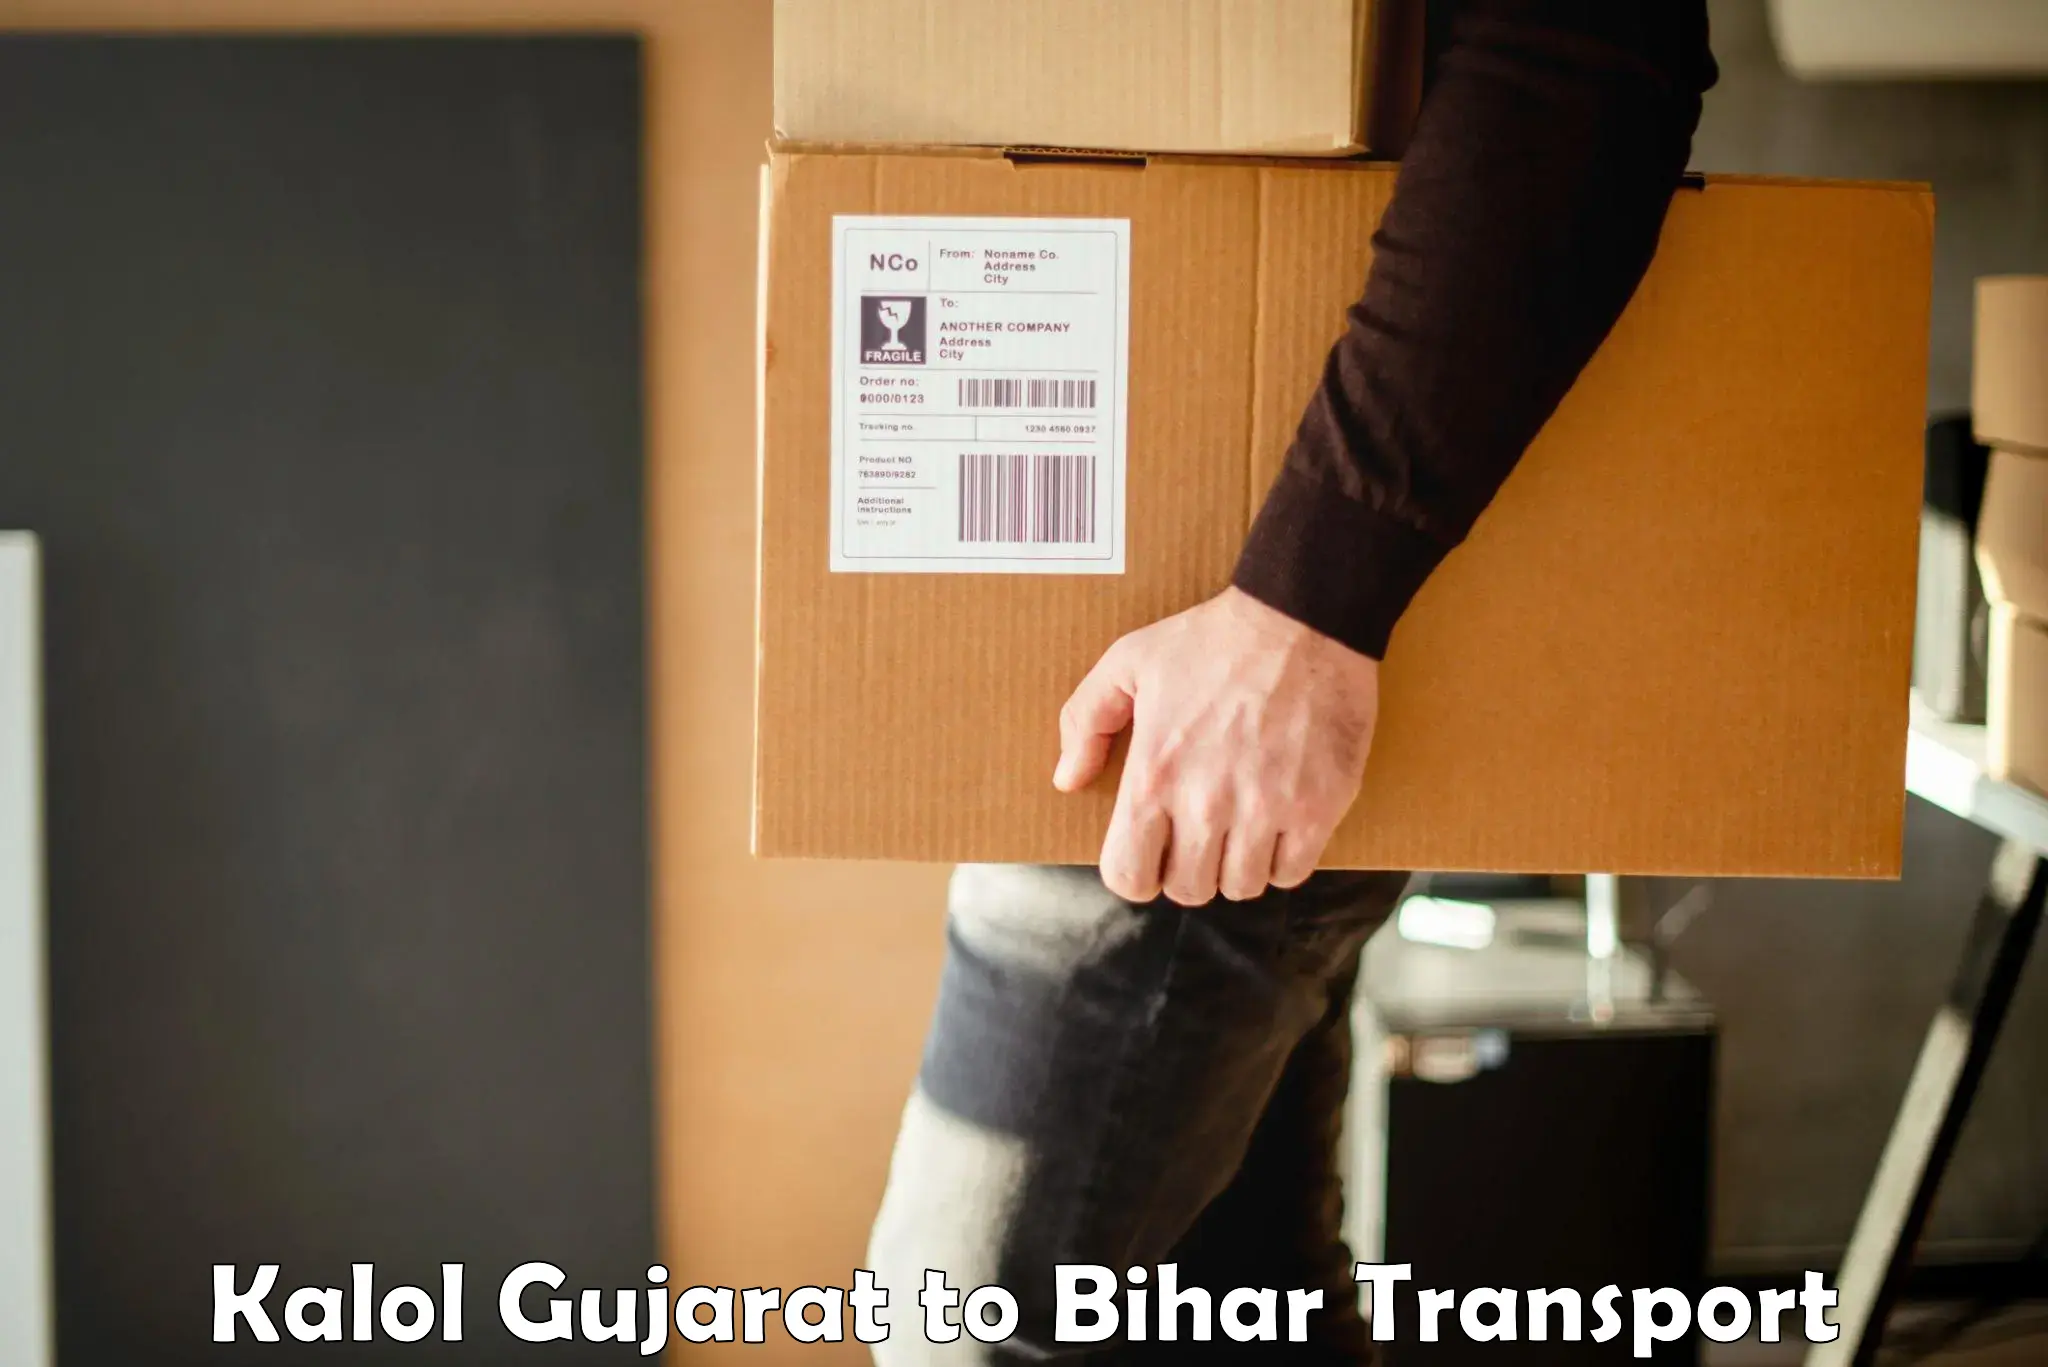 Pick up transport service Kalol Gujarat to Rajpur